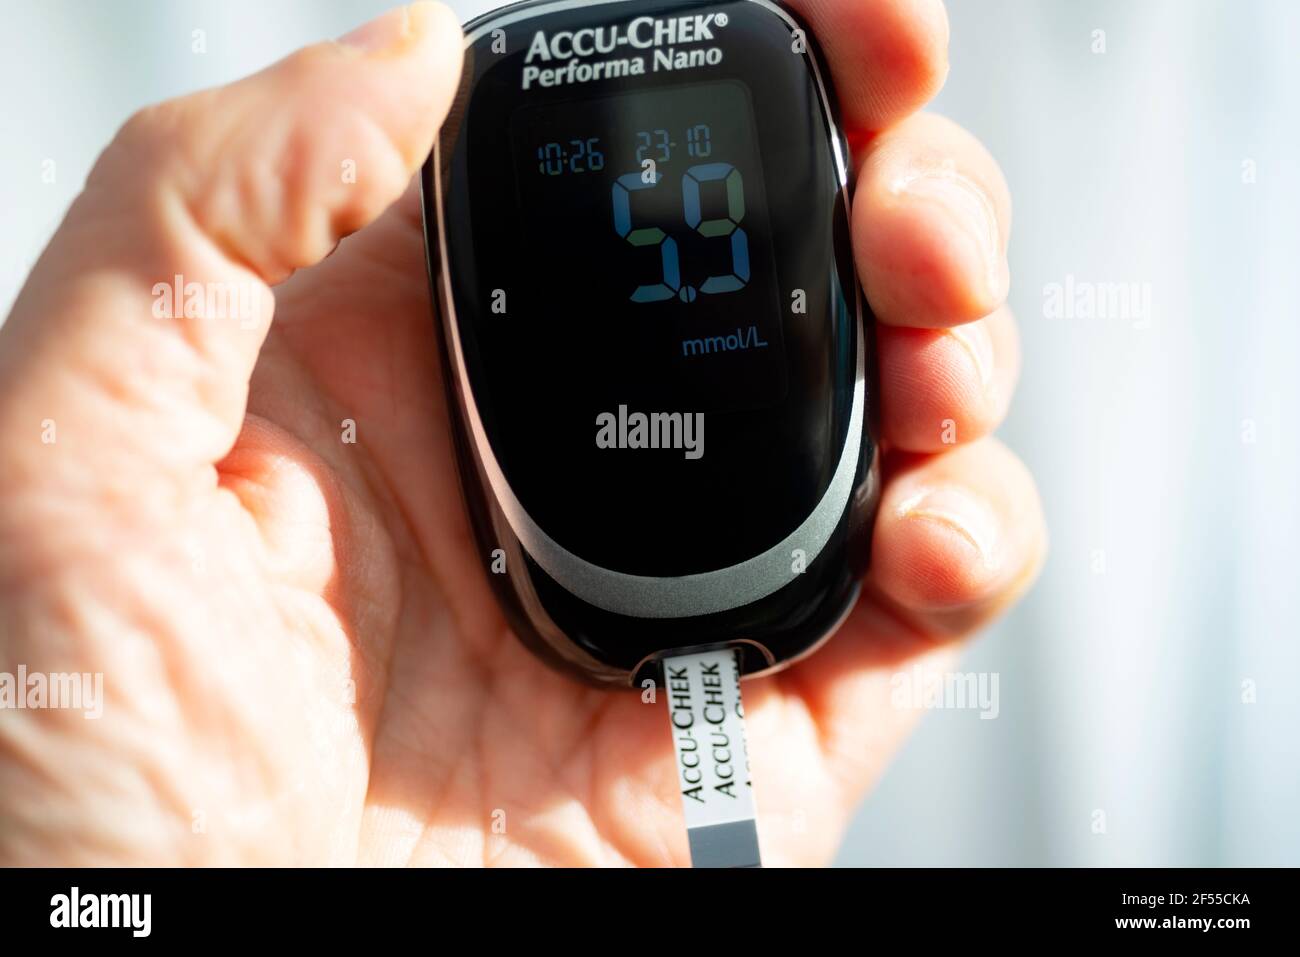 Accu Chek Performa Nano blood glucose monitor Stock Photo - Alamy